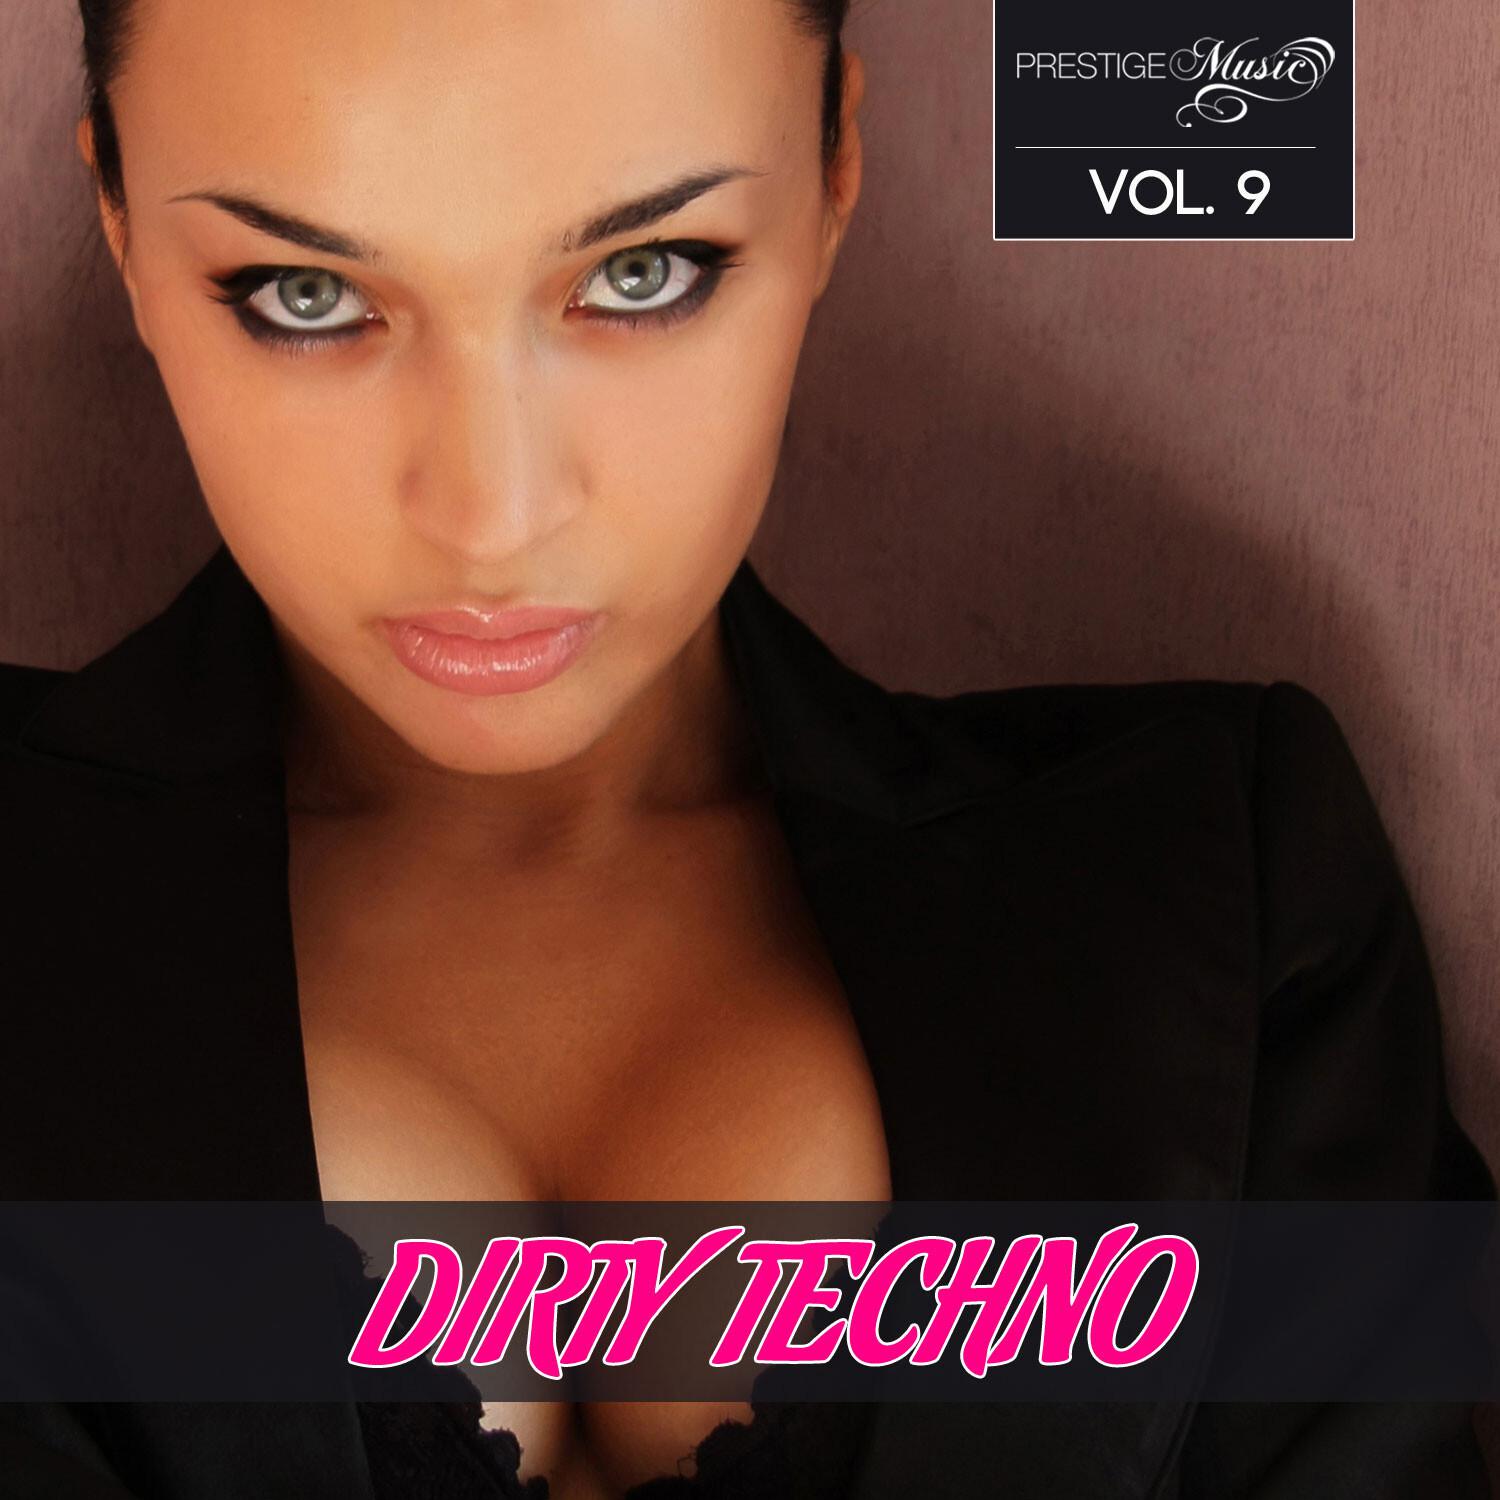 Dirty Techno, Vol. 9